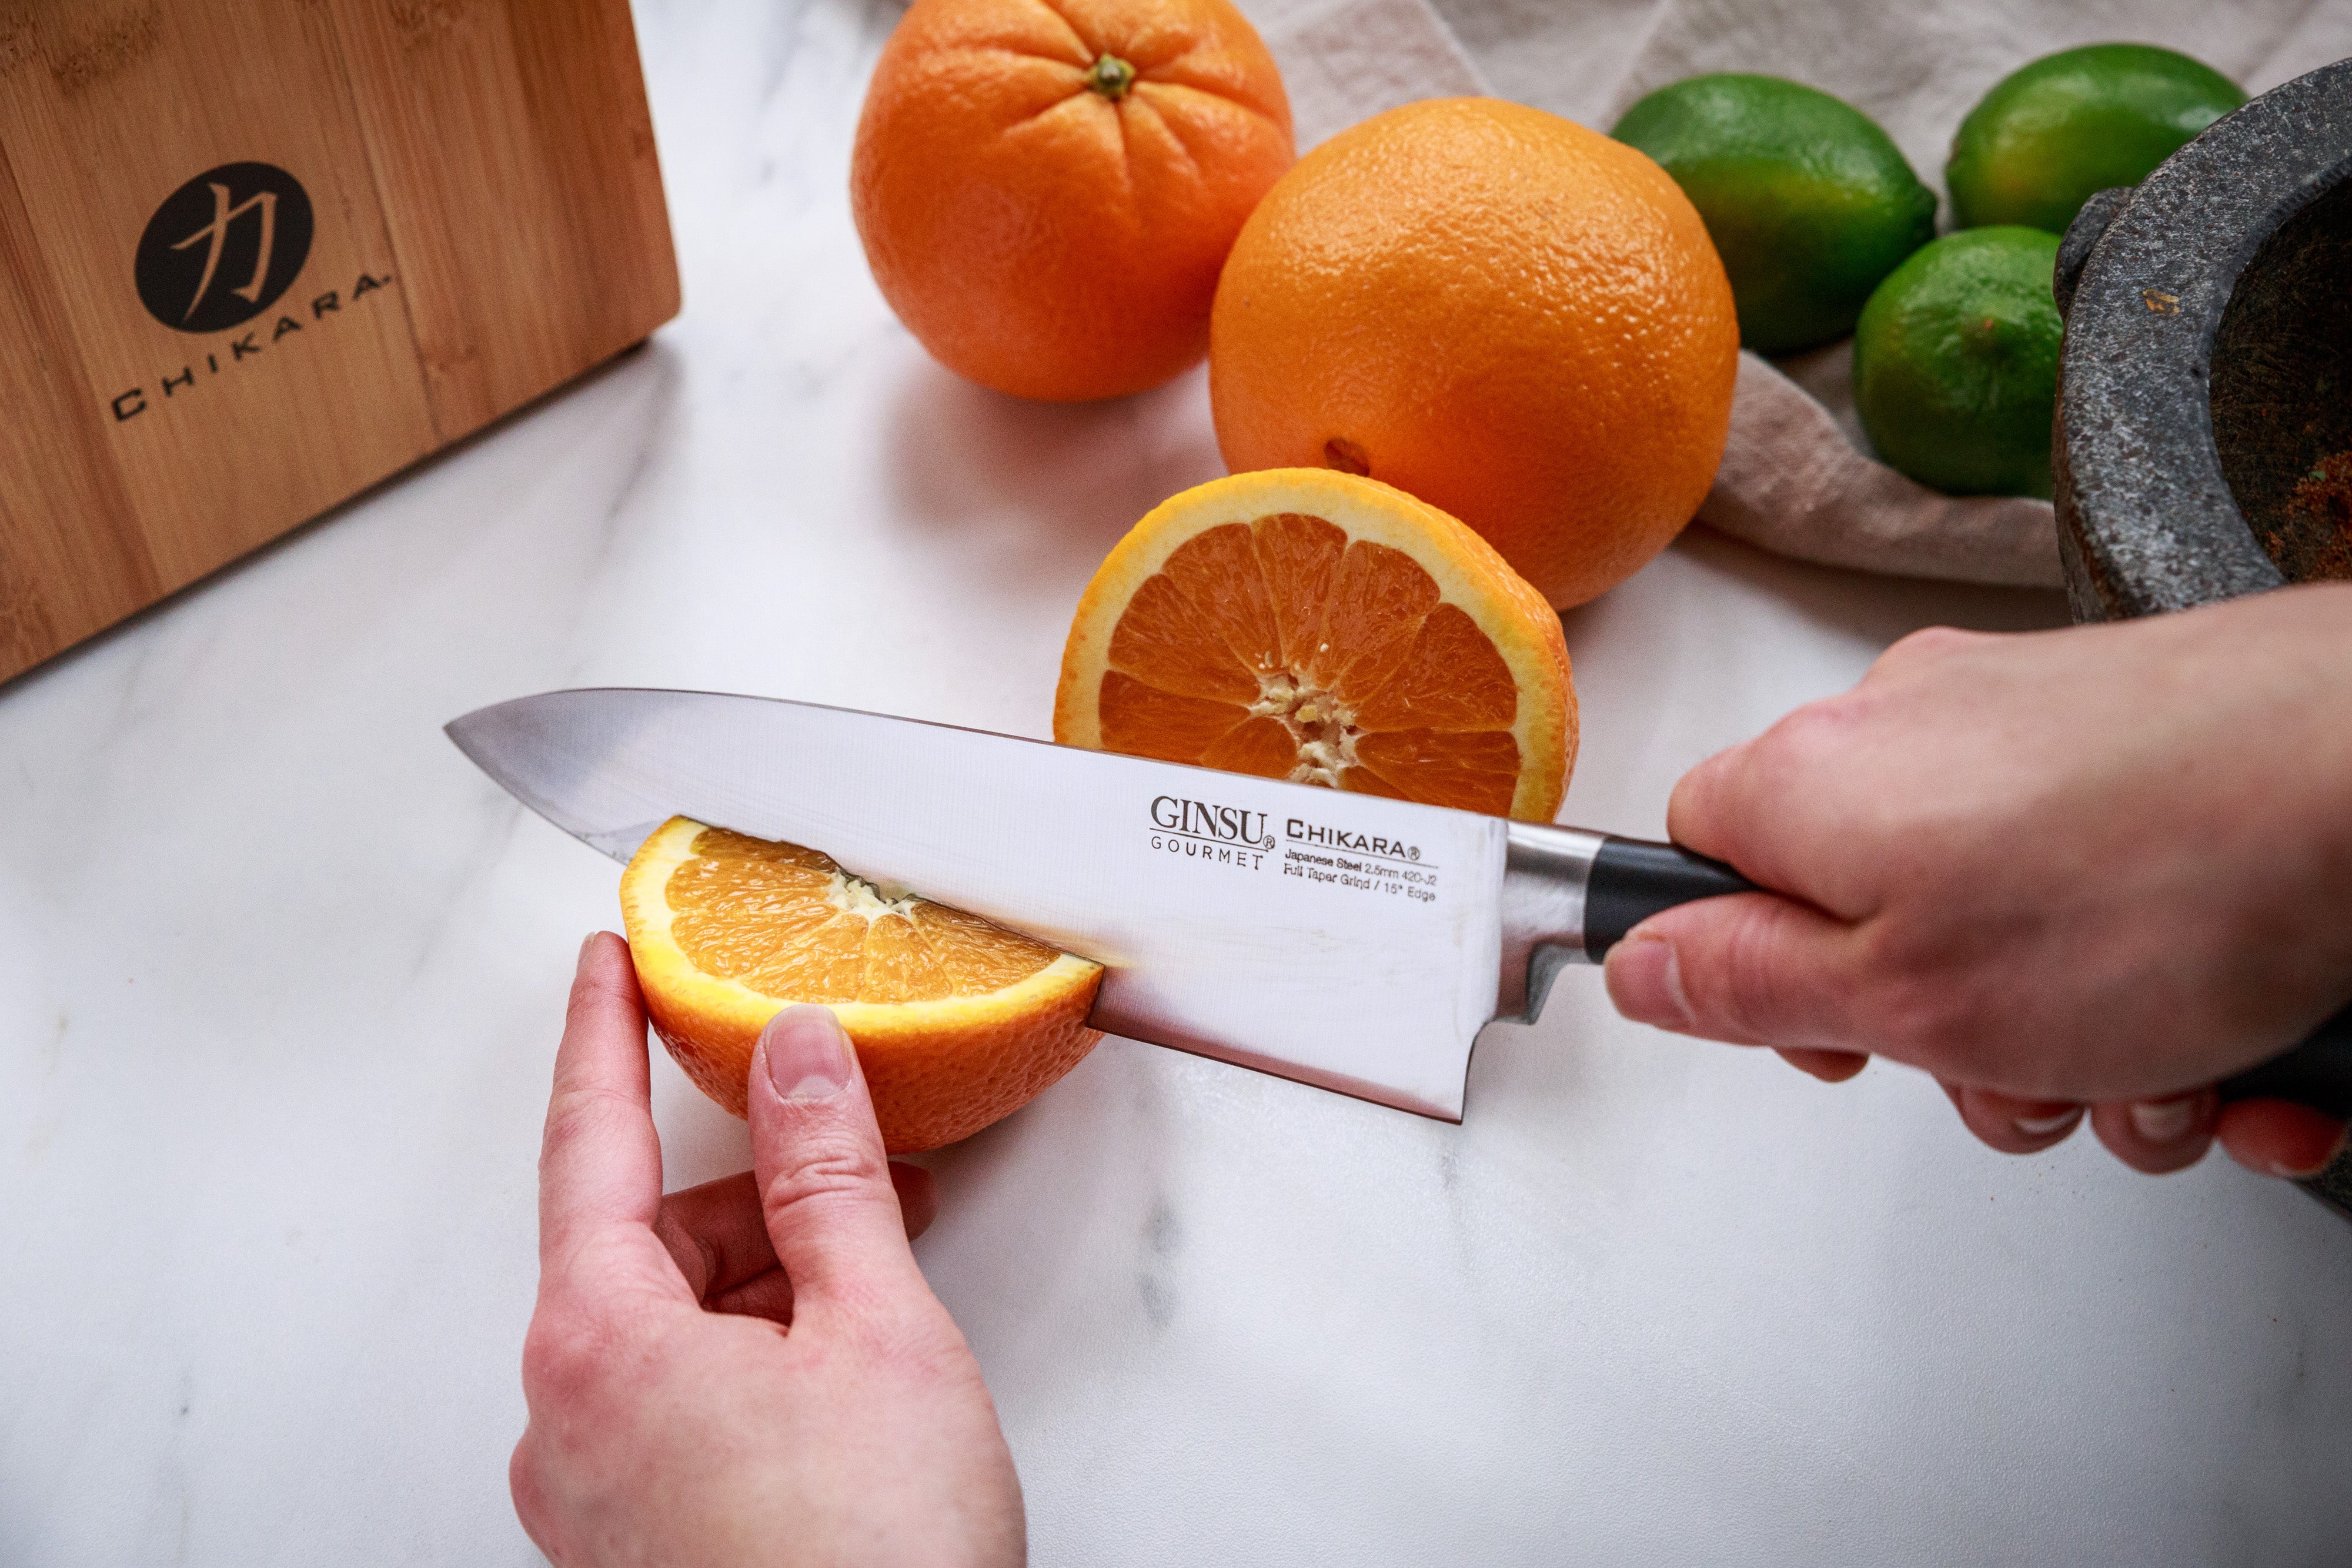 Ginsu 15 Pc Stainless Knife Set